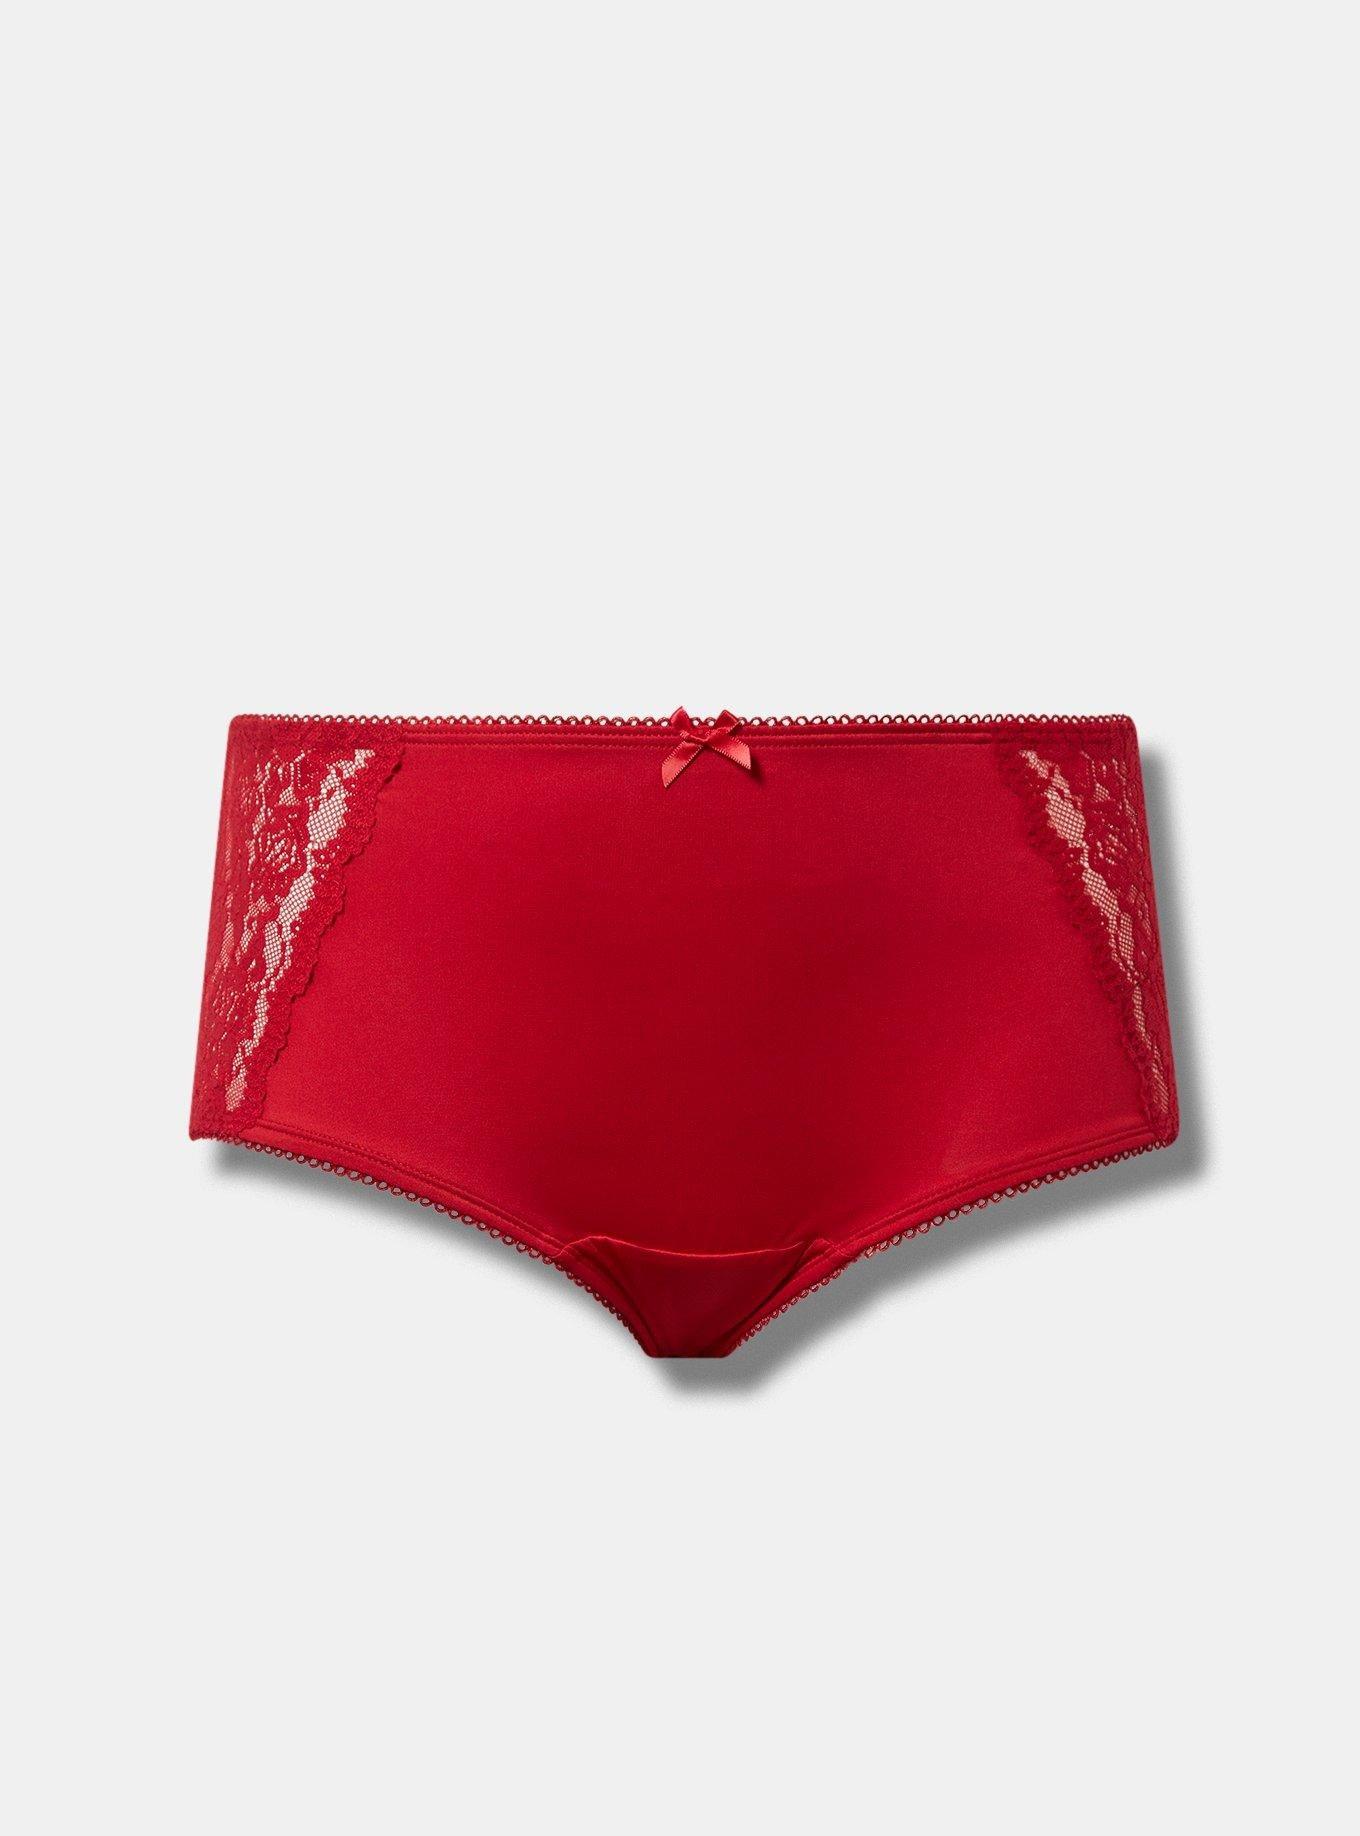 Parisian Summer Cheeky Panties // Best Women's Cheeky Underwear